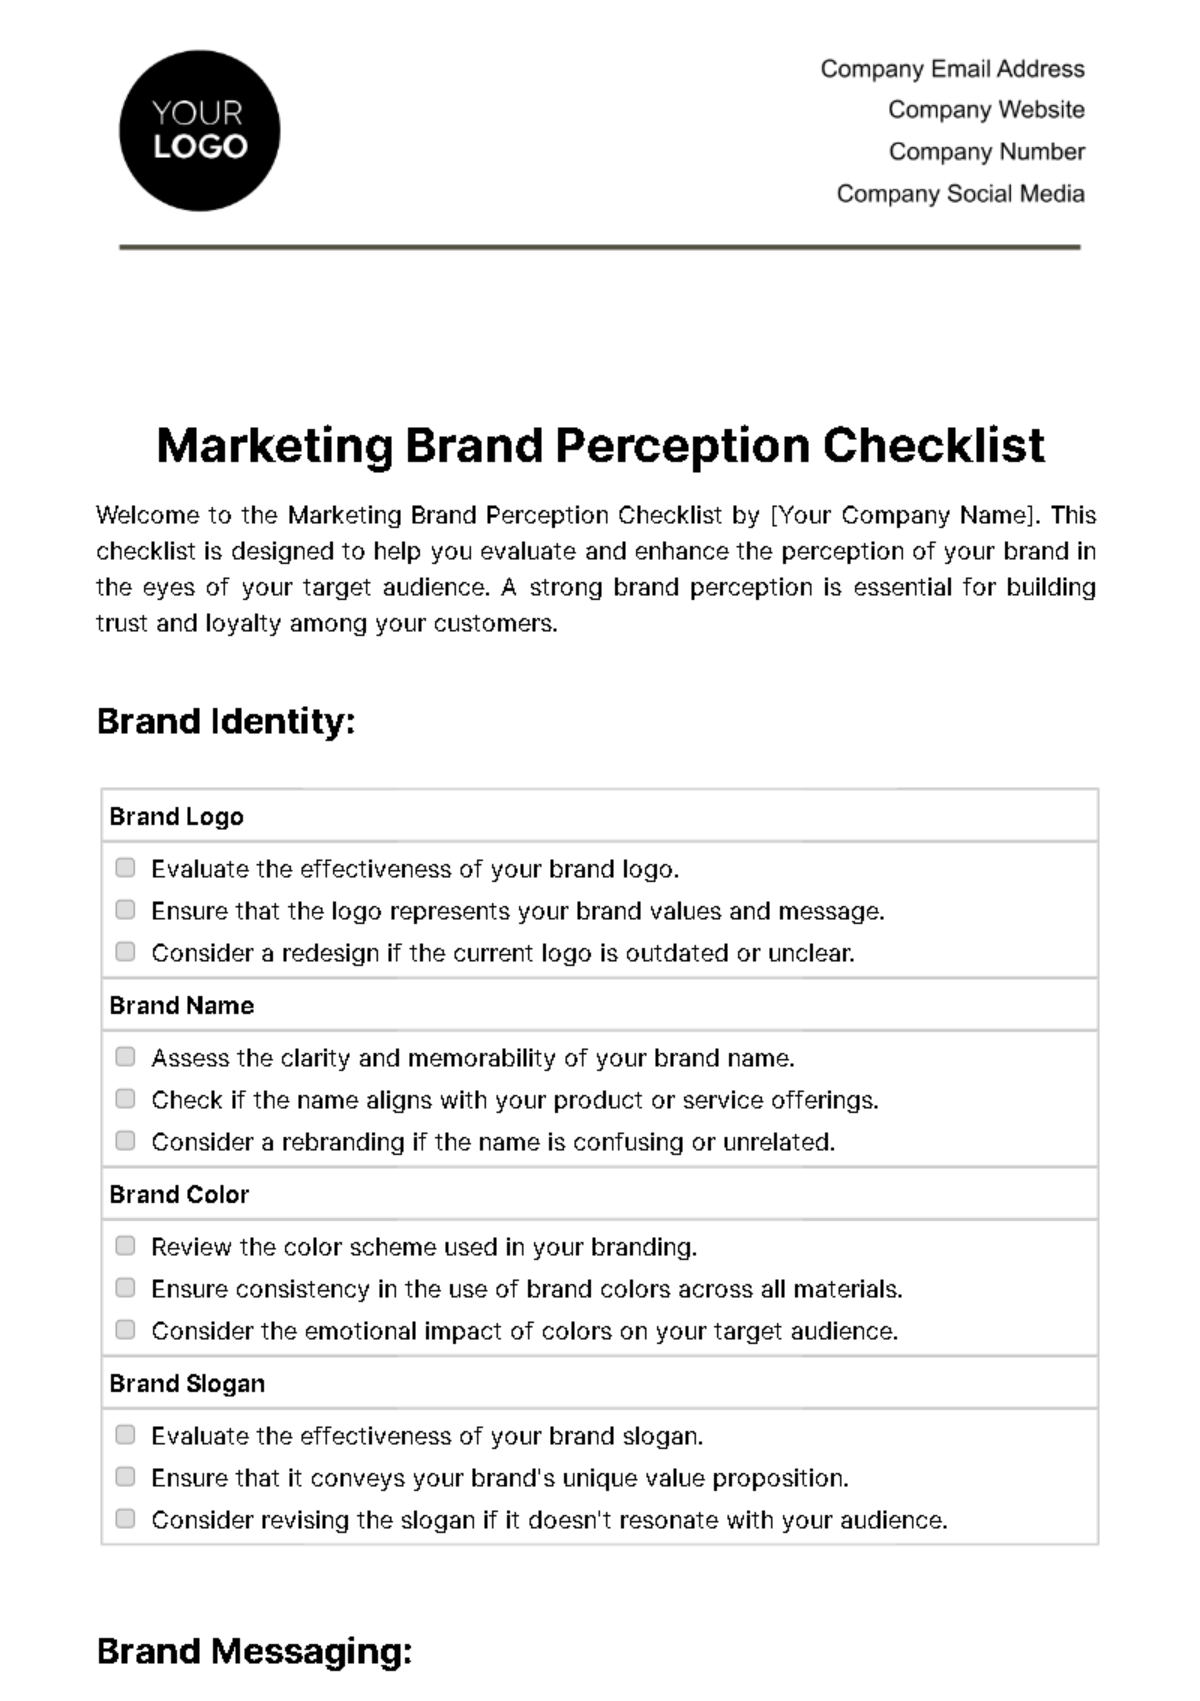 Marketing Brand Perception Checklist Template